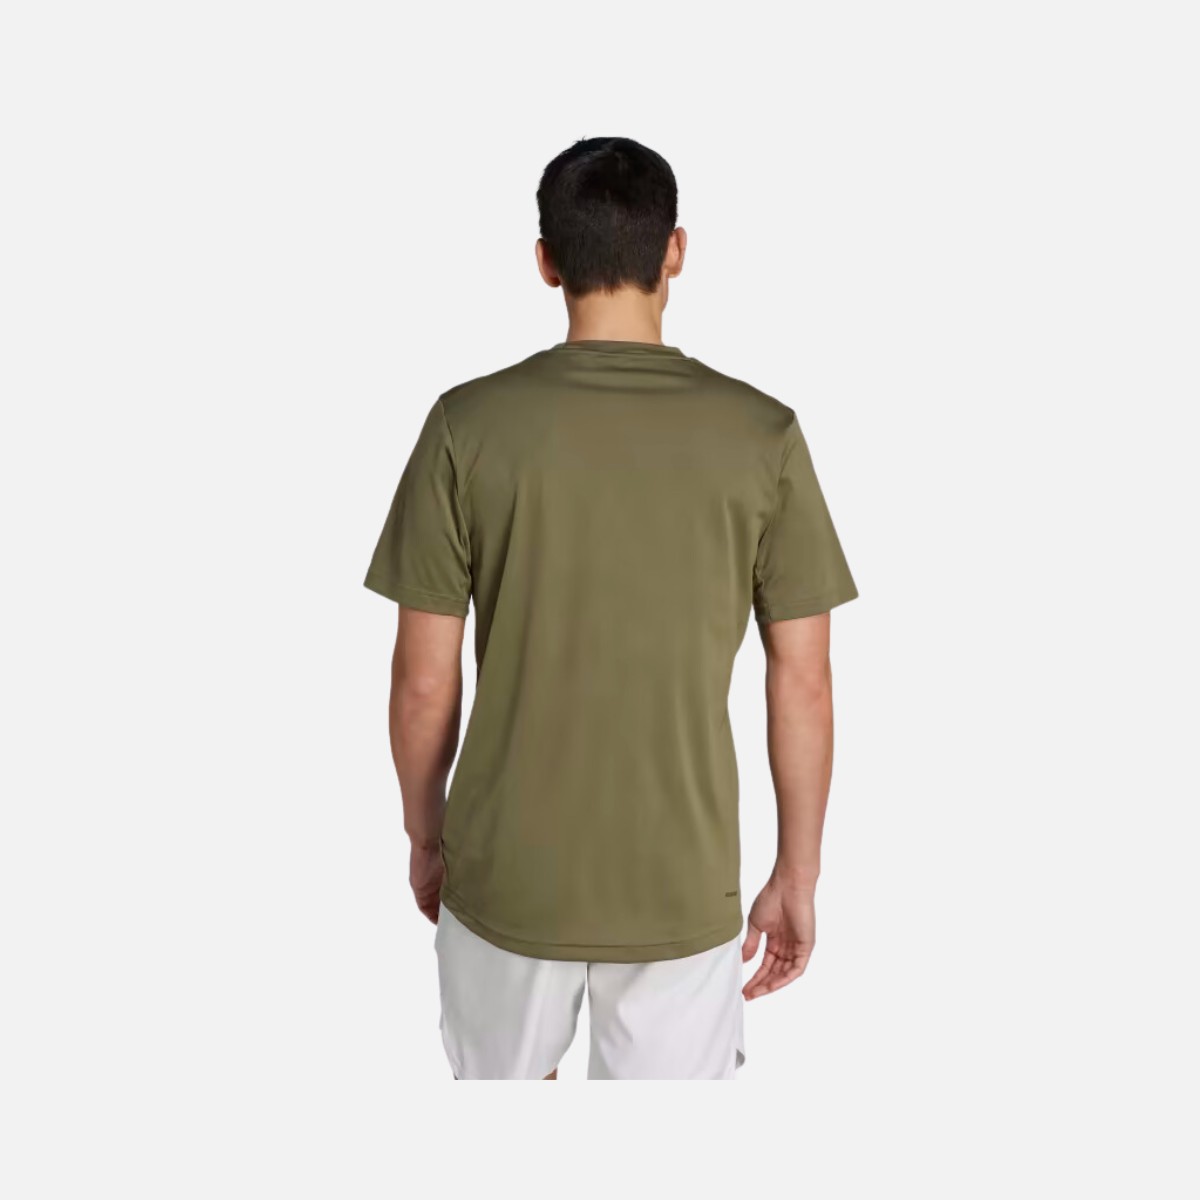 Adidas Essential Men's Training Camo T-shirt -Olive Strata/Black